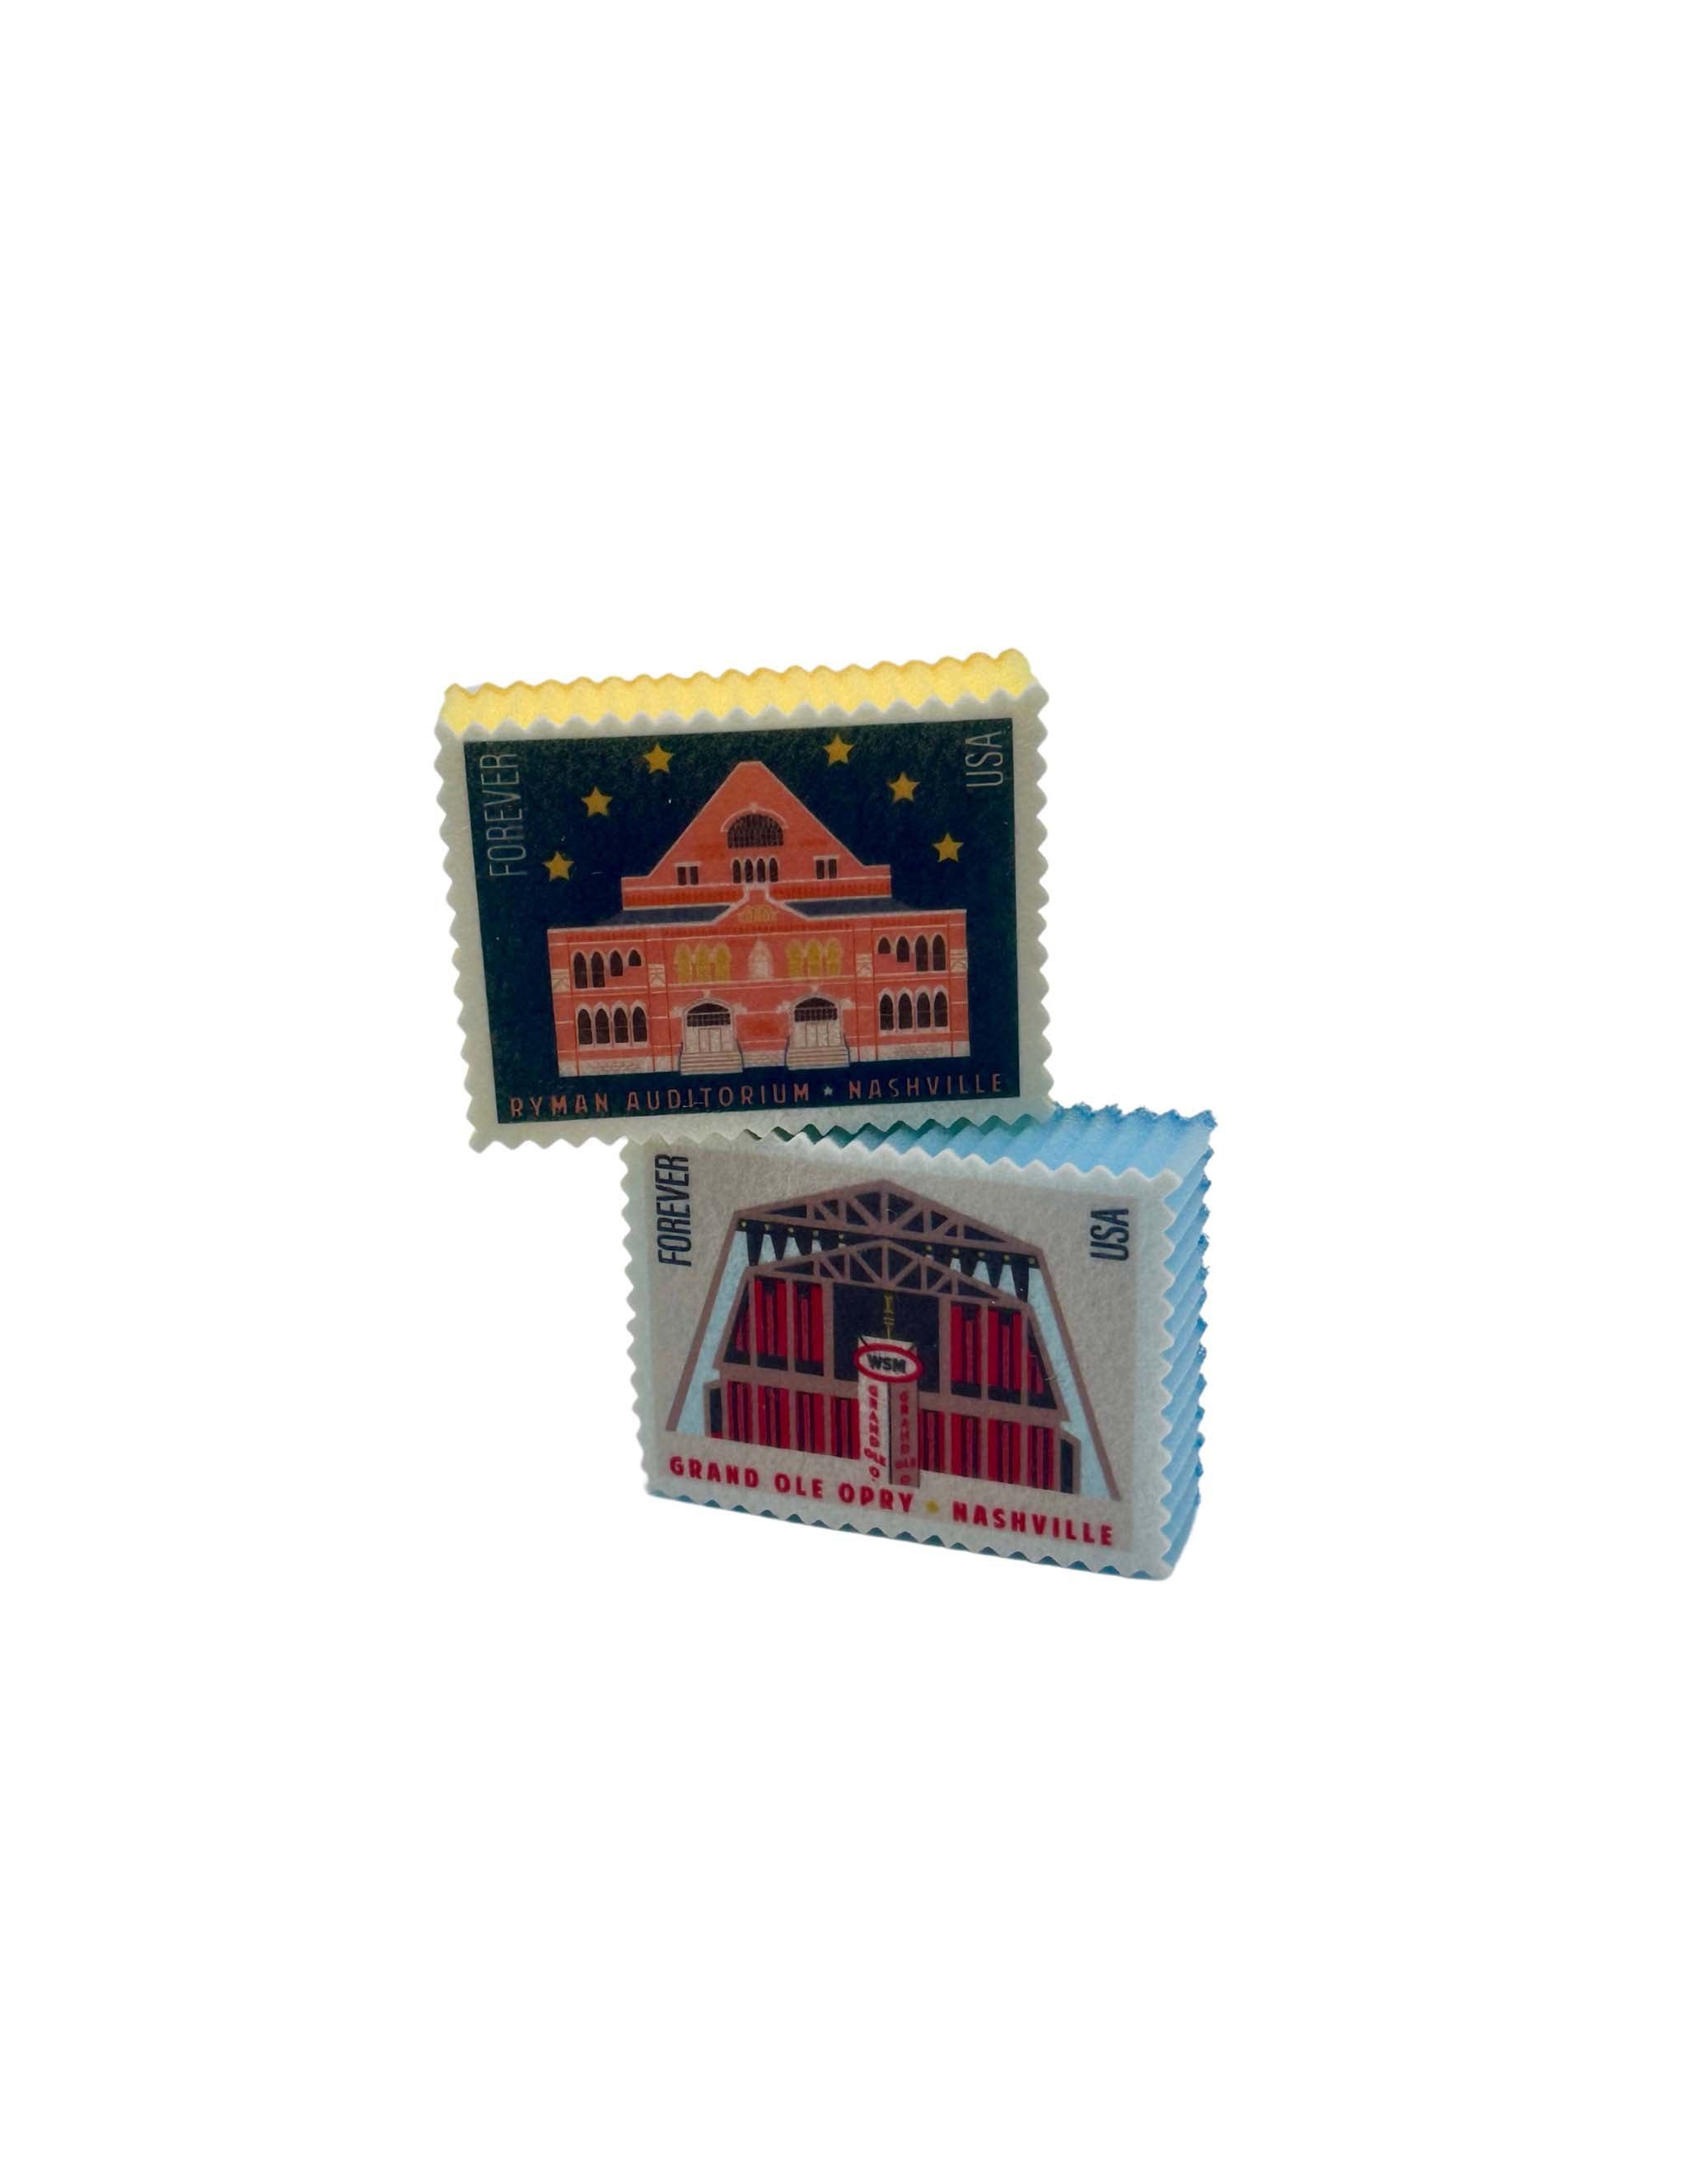 Opry & Ryman Travel Stamp Sponge Set